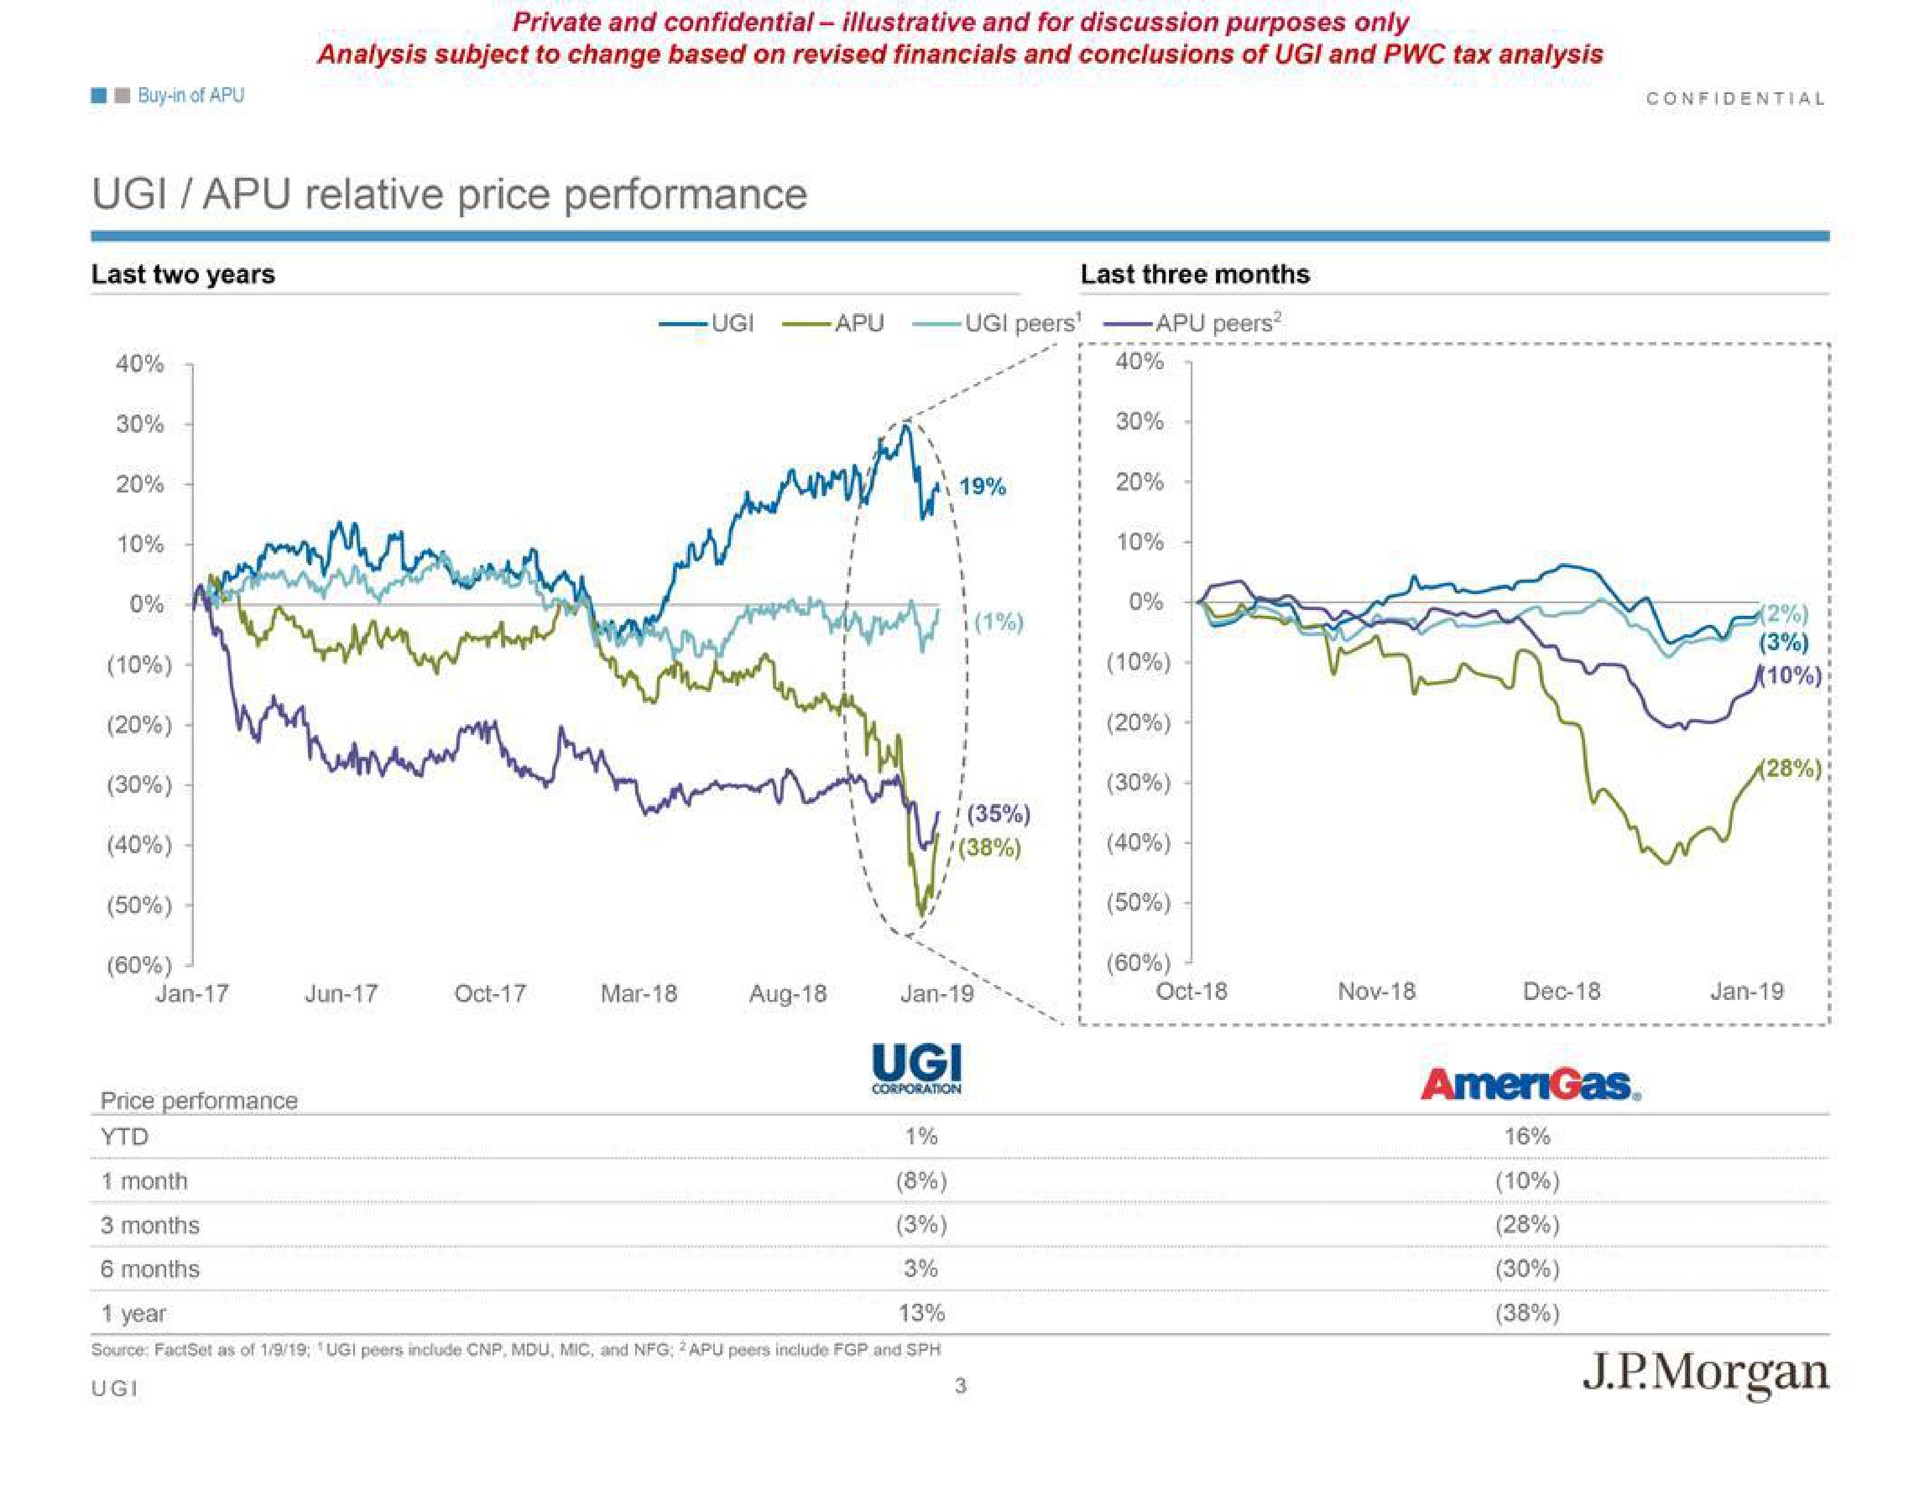 me relative price performance last two years last three months at i i i i a sen price performance month year as morgan | J.P.Morgan